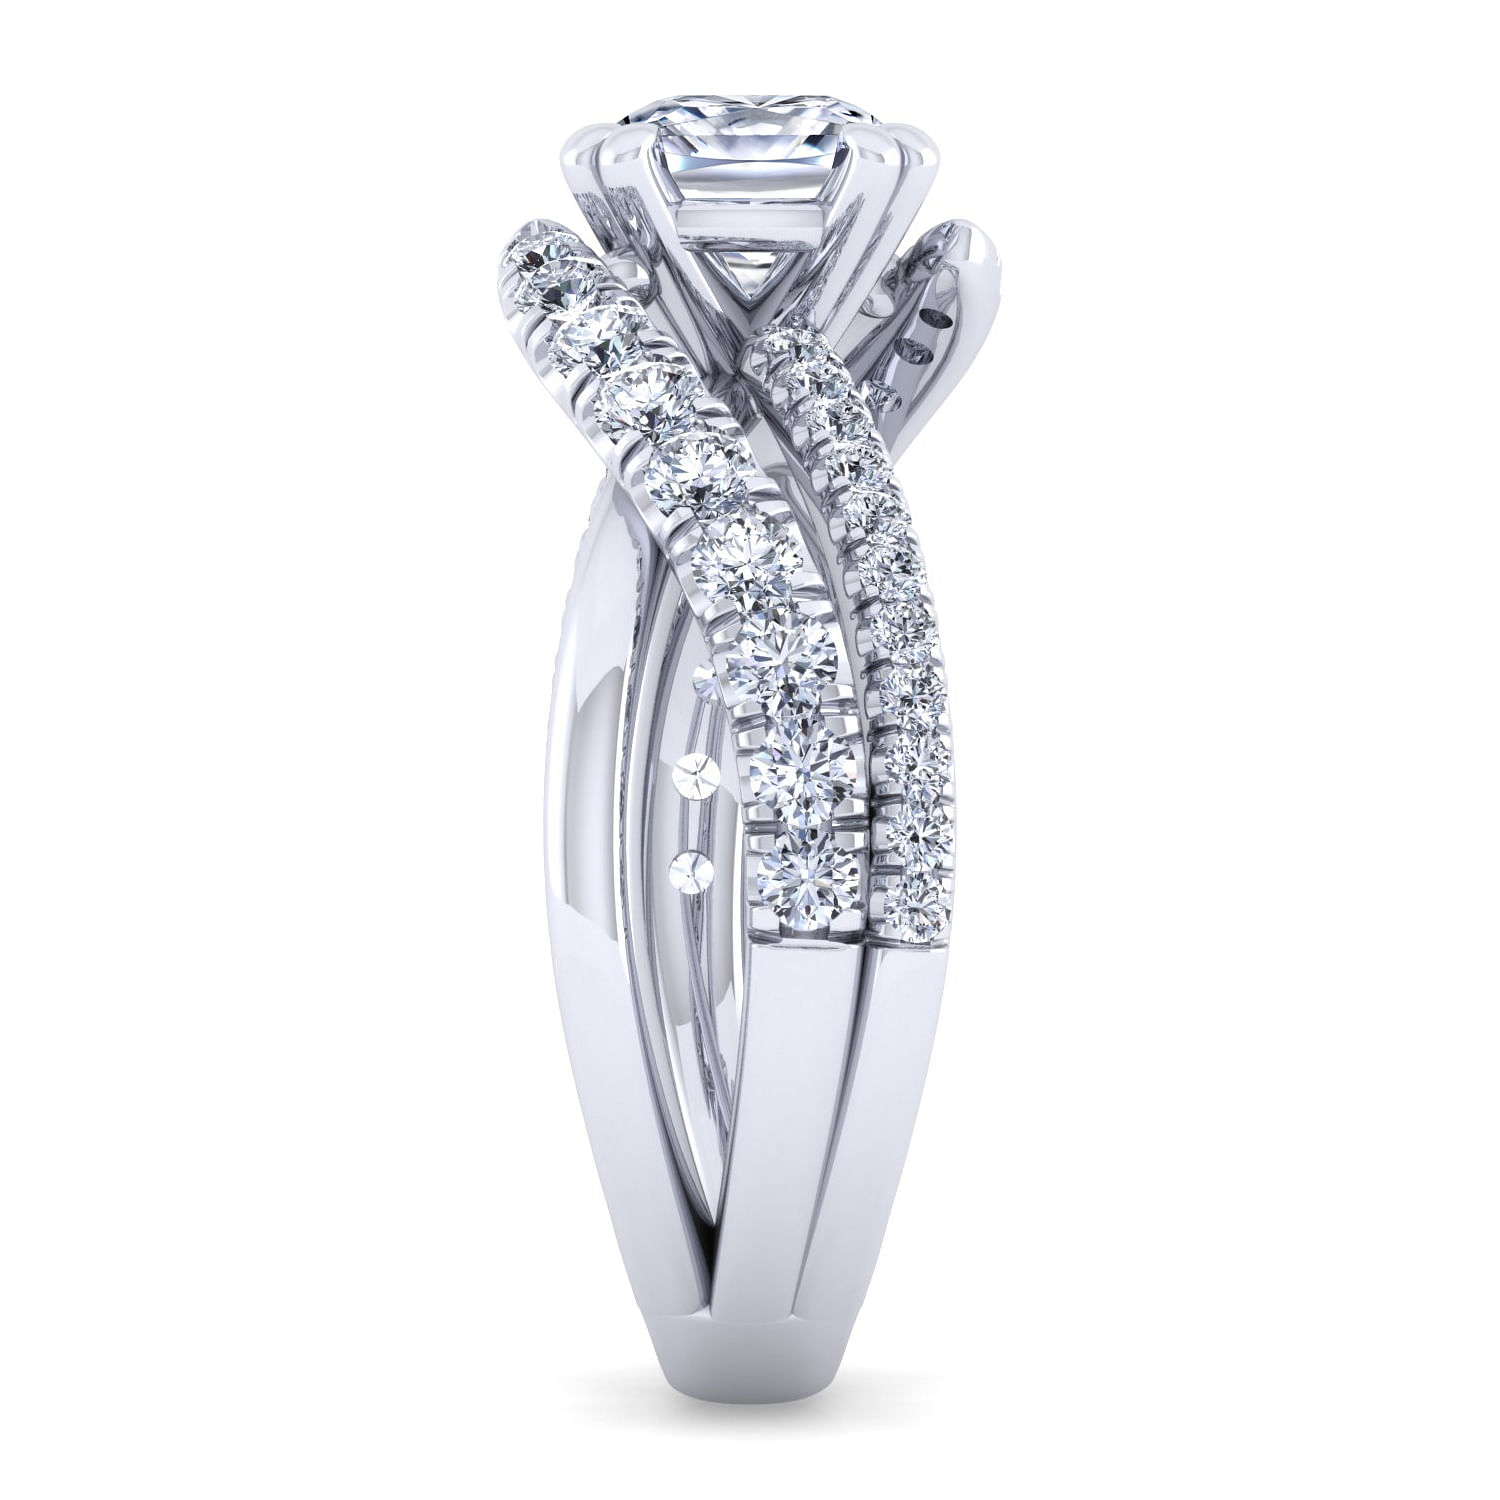 Platinum Cushion Cut Bypass Diamond Engagement Ring